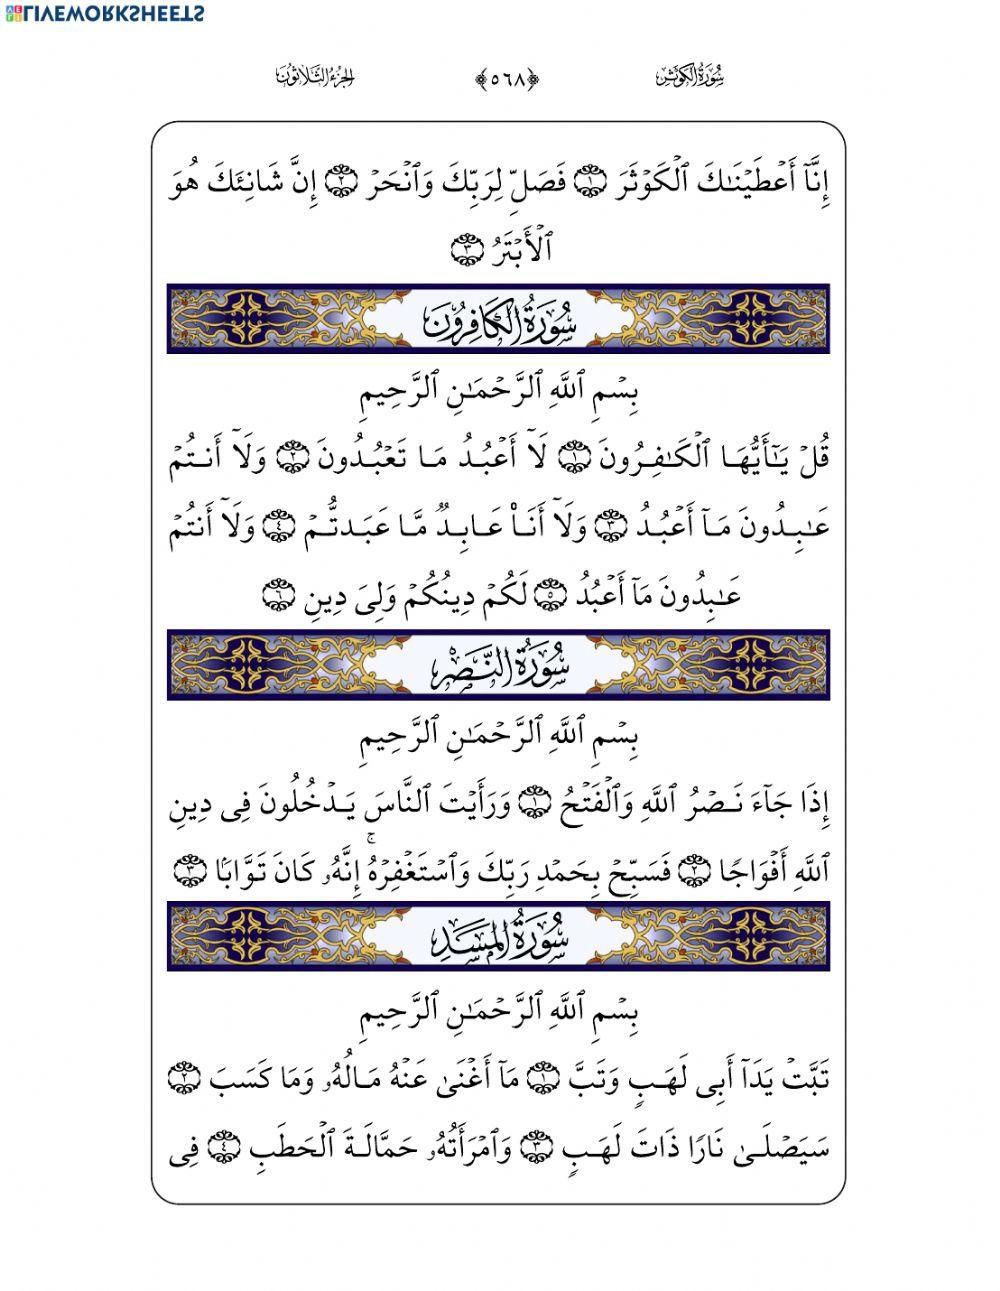 Understand Quranic Arabic